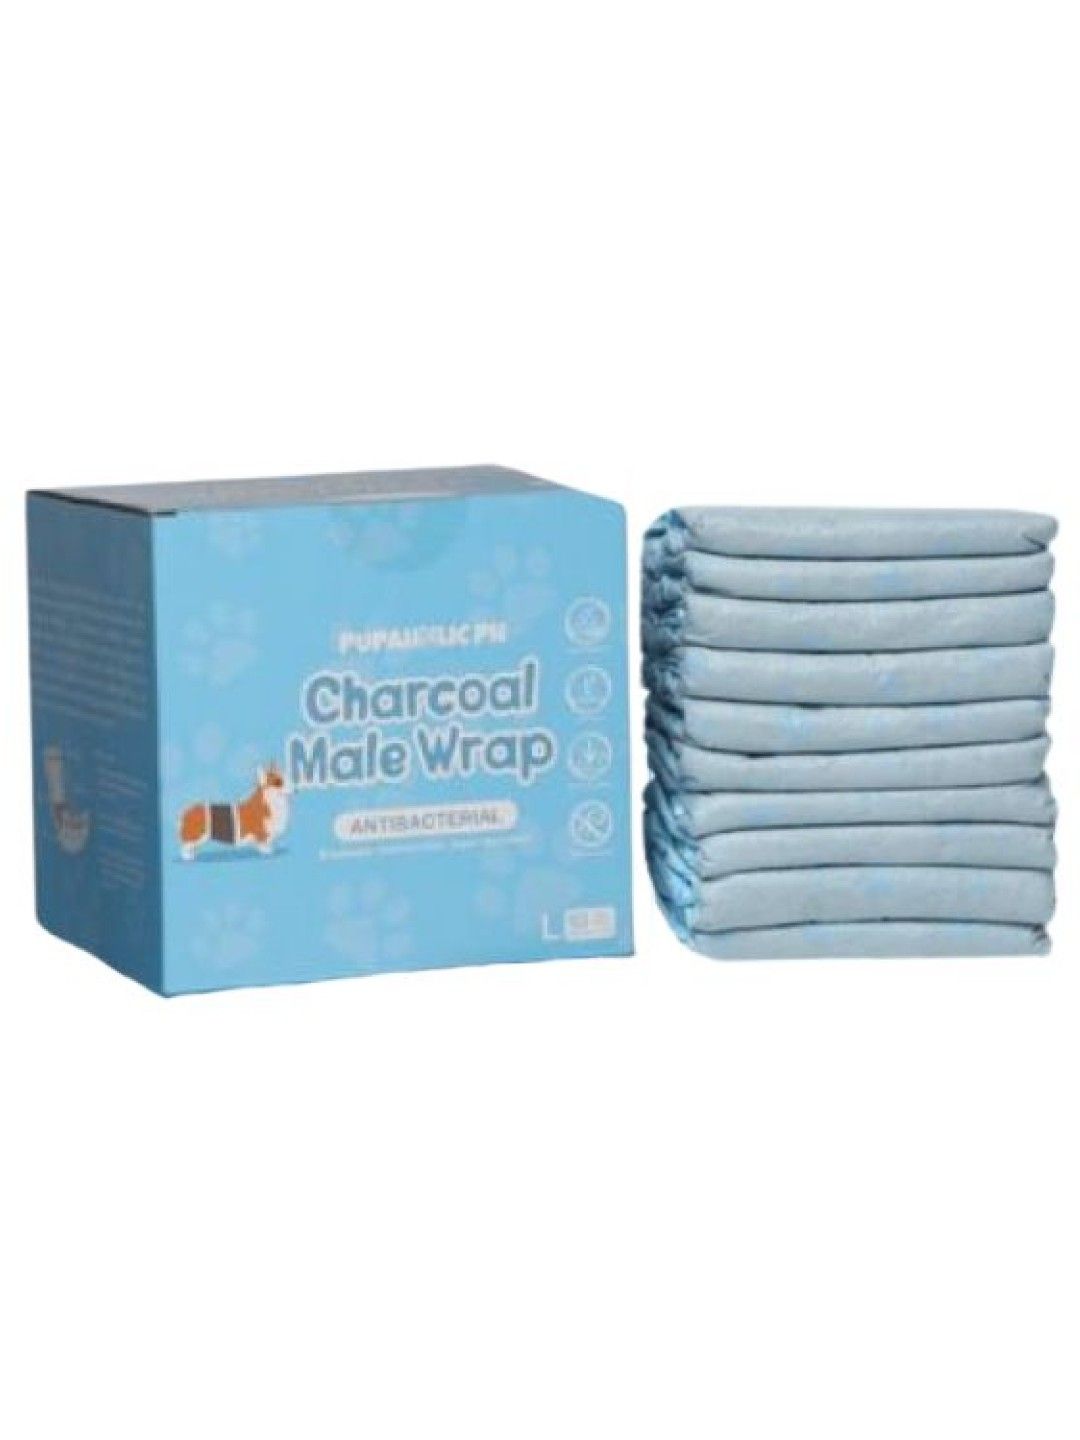 Pupaholic PH 1 Box of Charcoal Male Wraps 10Pcs/Box - Large